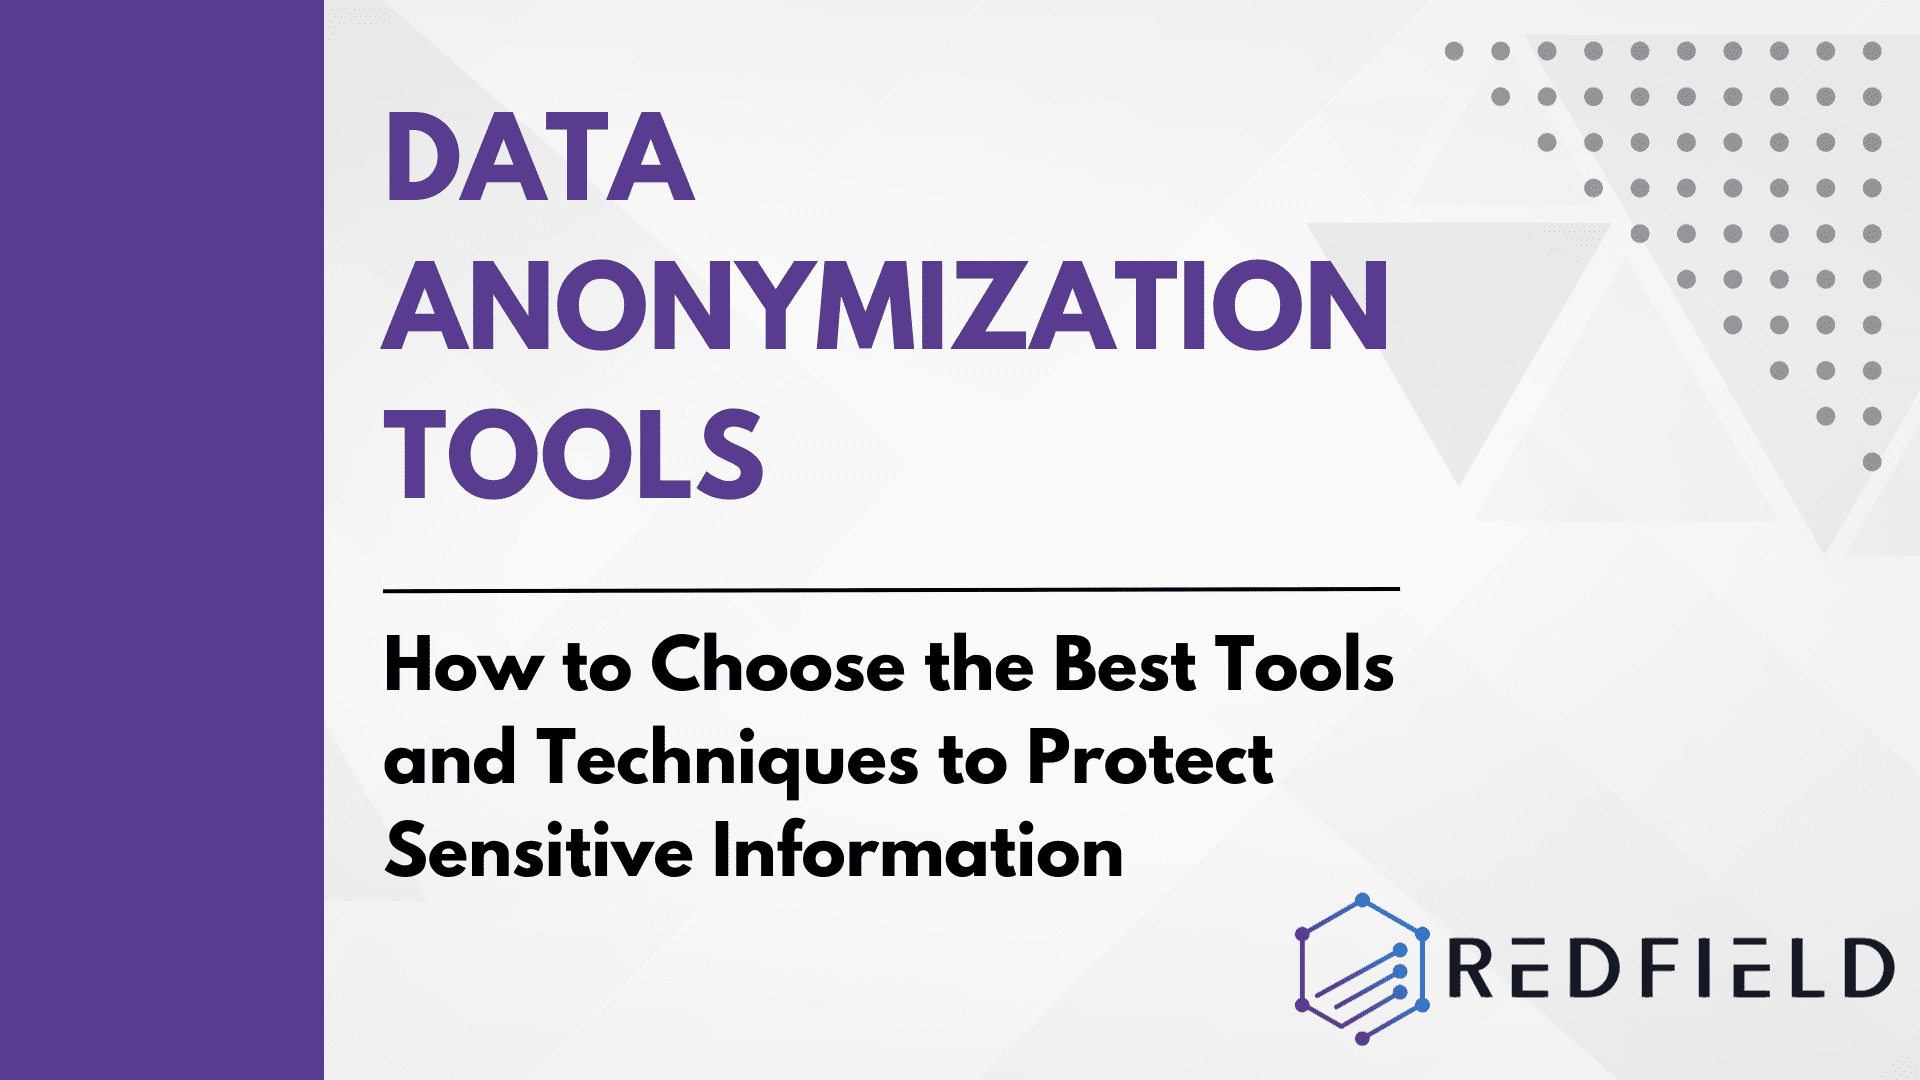 Data anonymization tools